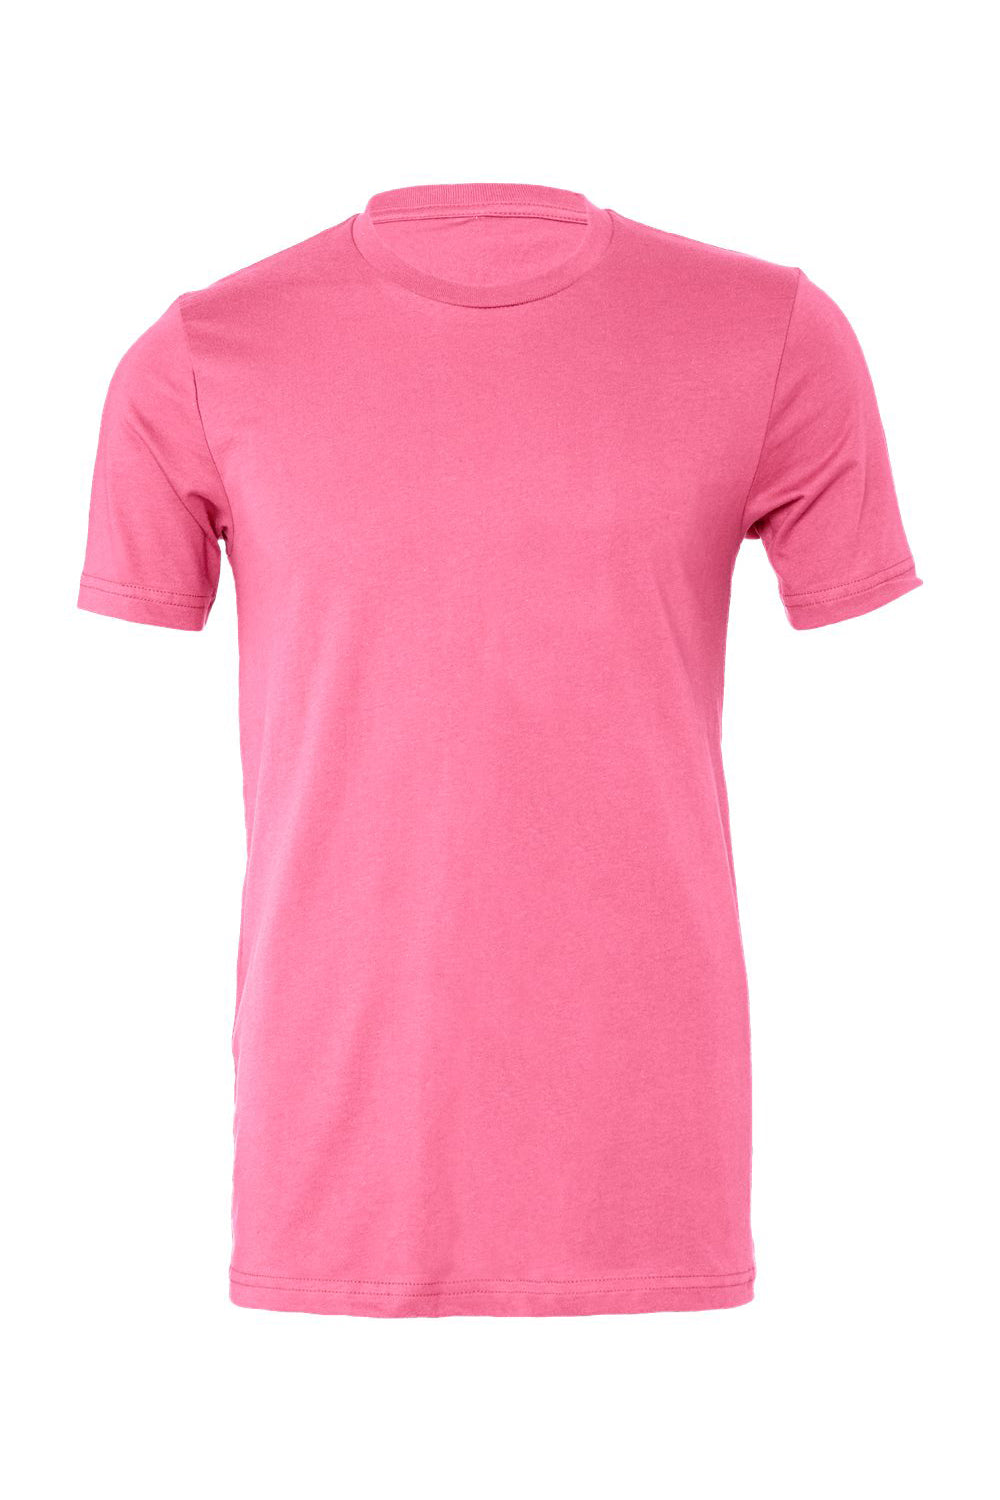 Bella + Canvas BC3001/3001C Mens Jersey Short Sleeve Crewneck T-Shirt Charity Pink Flat Front